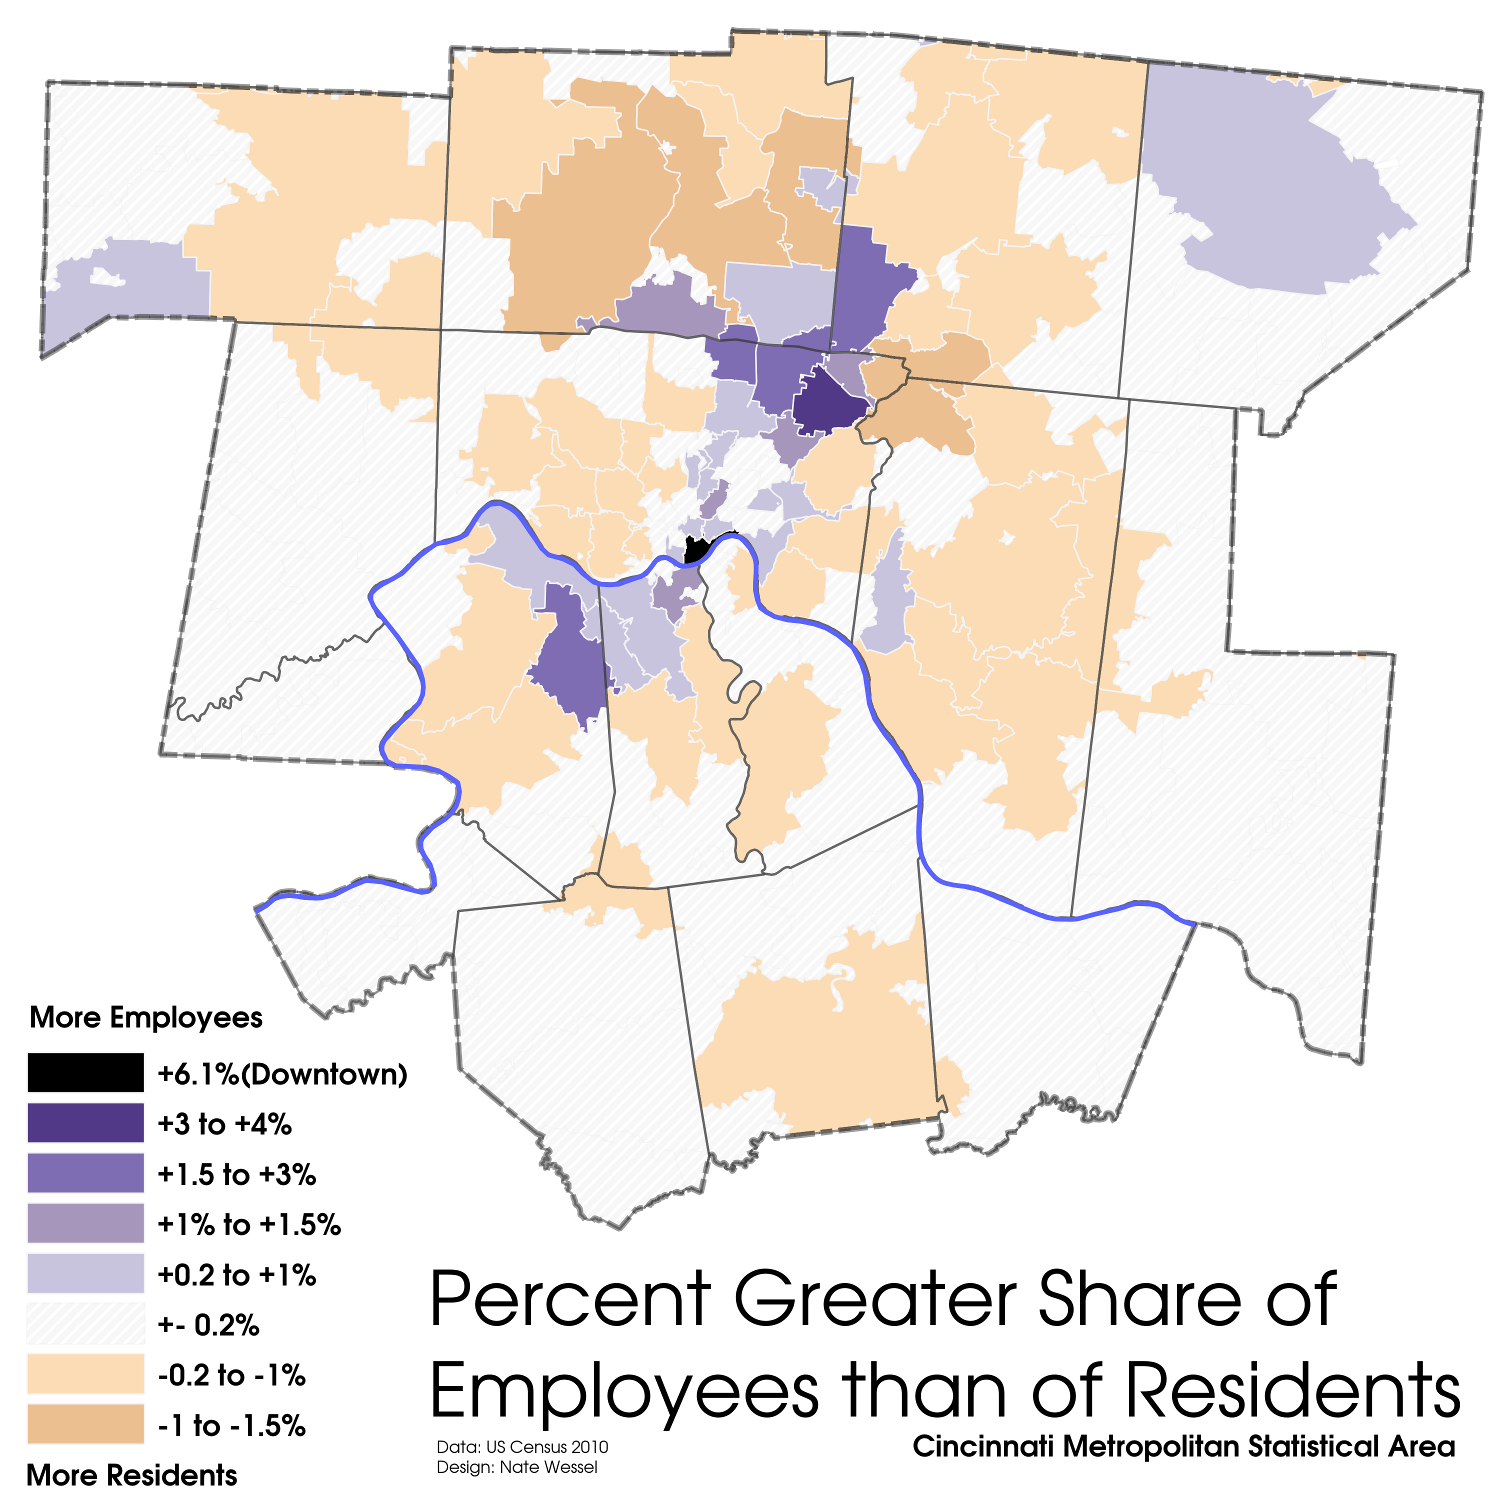 Cincinnati Employment/Population Share